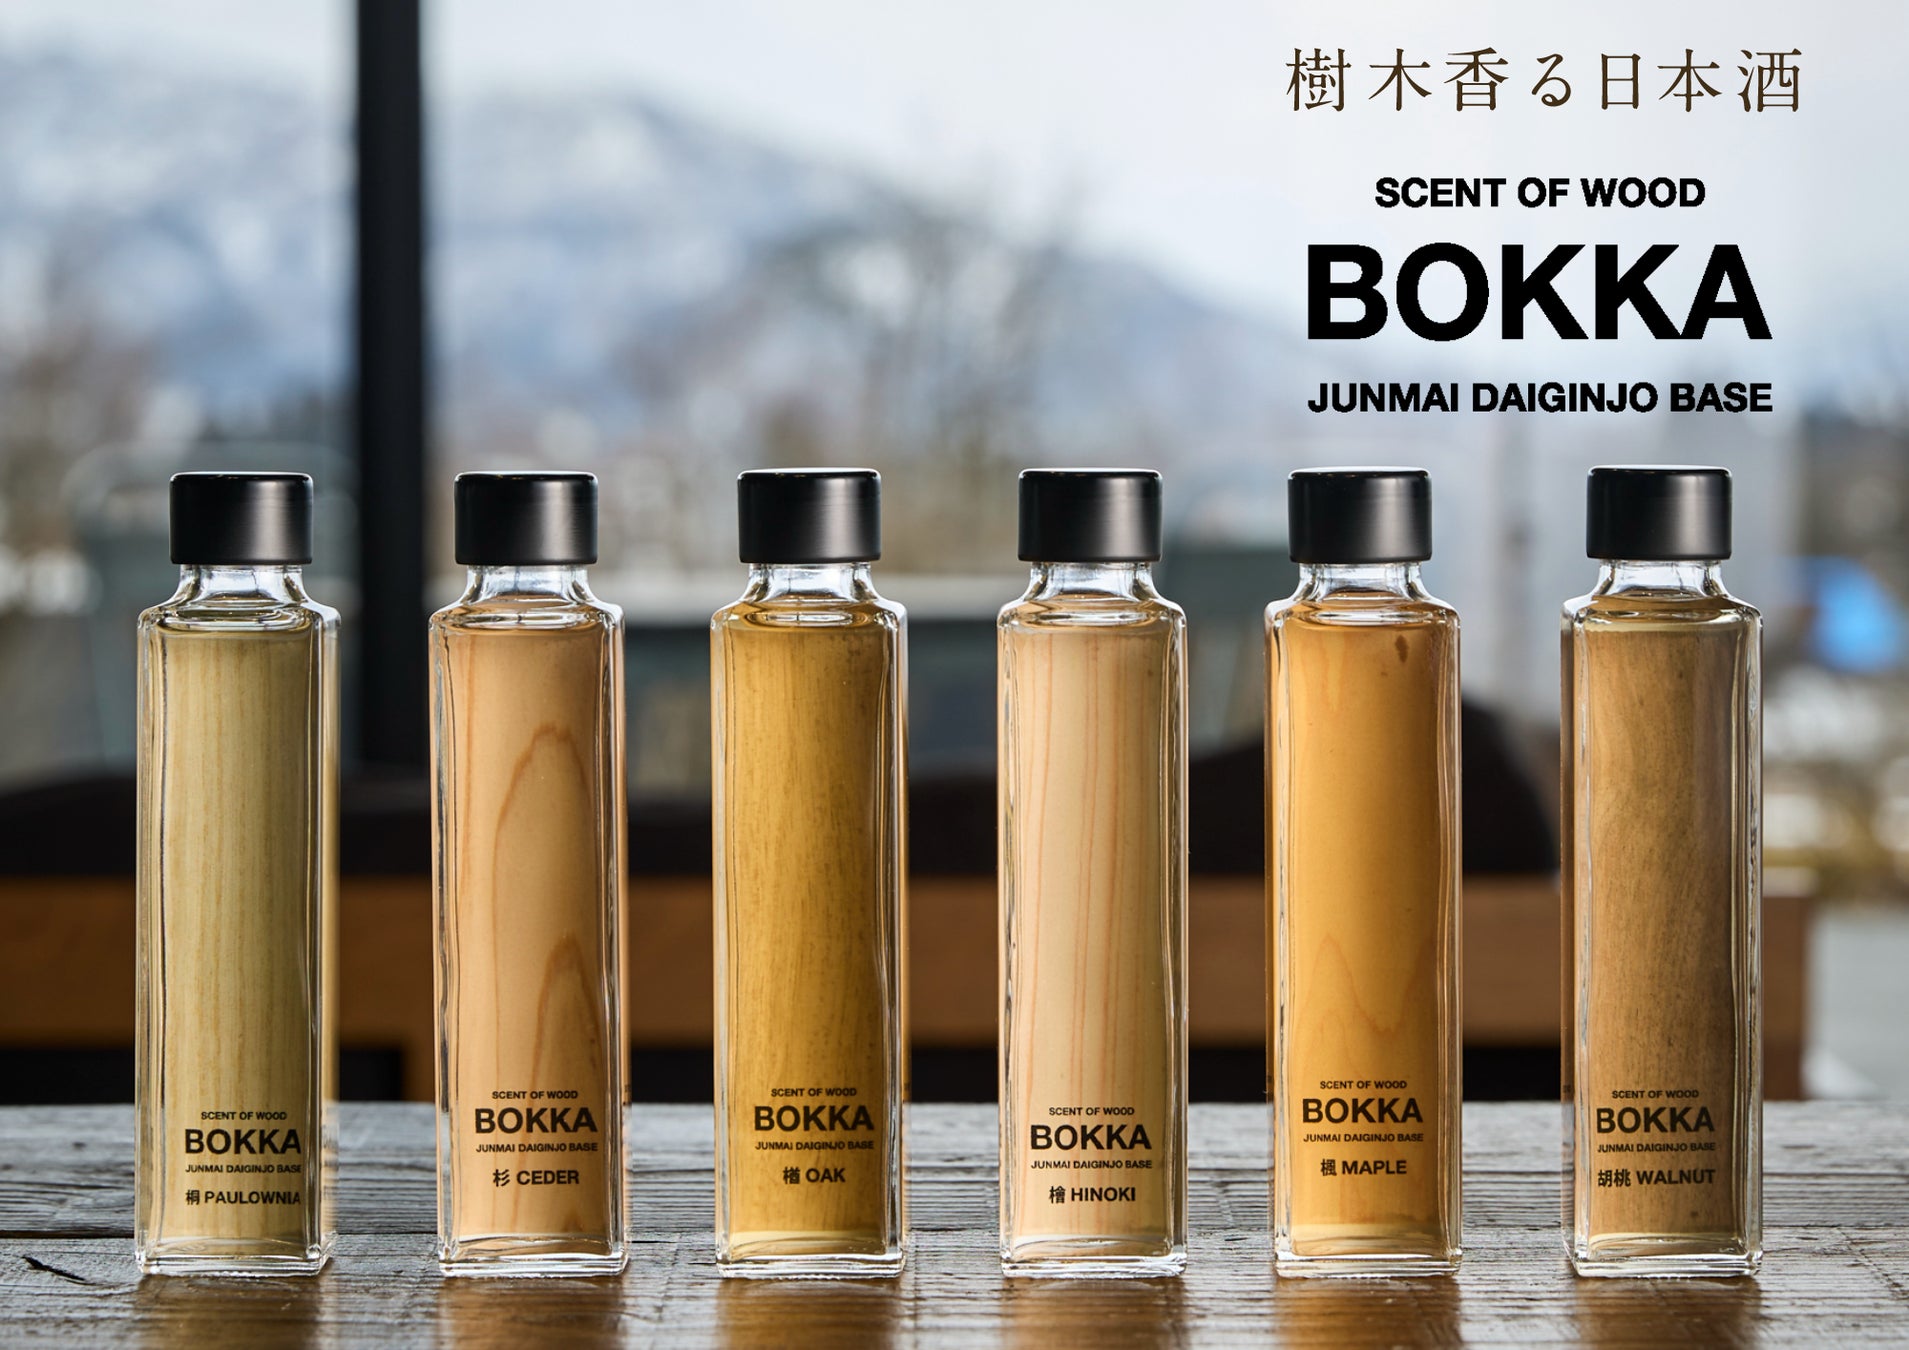 【SAKEX】能登半島地震に対する日本酒業界への義援金振込のご報告とお礼